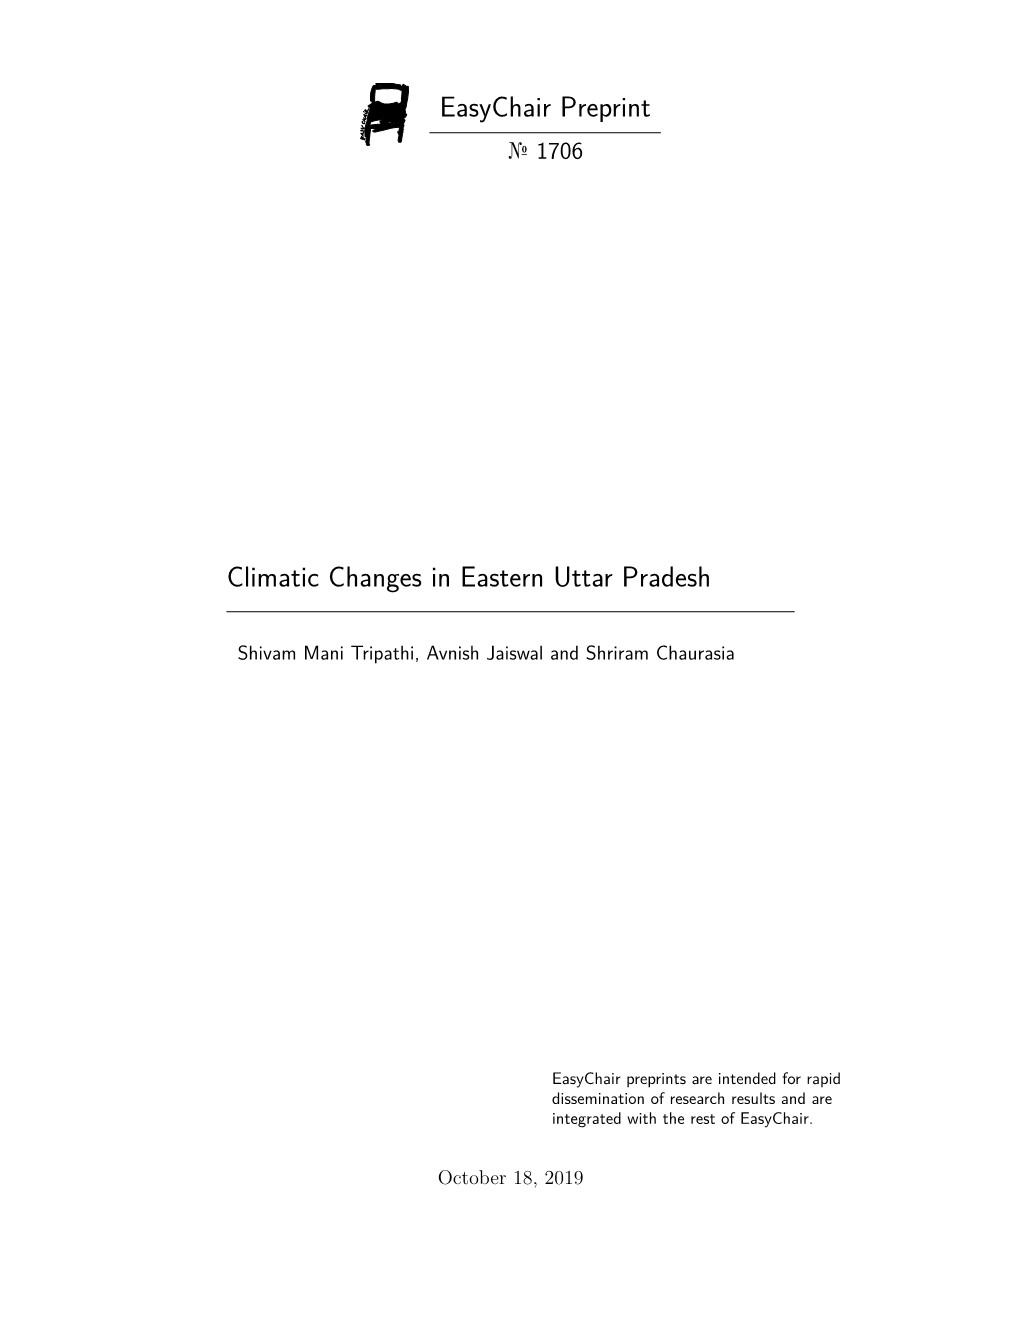 Easychair Preprint Climatic Changes in Eastern Uttar Pradesh